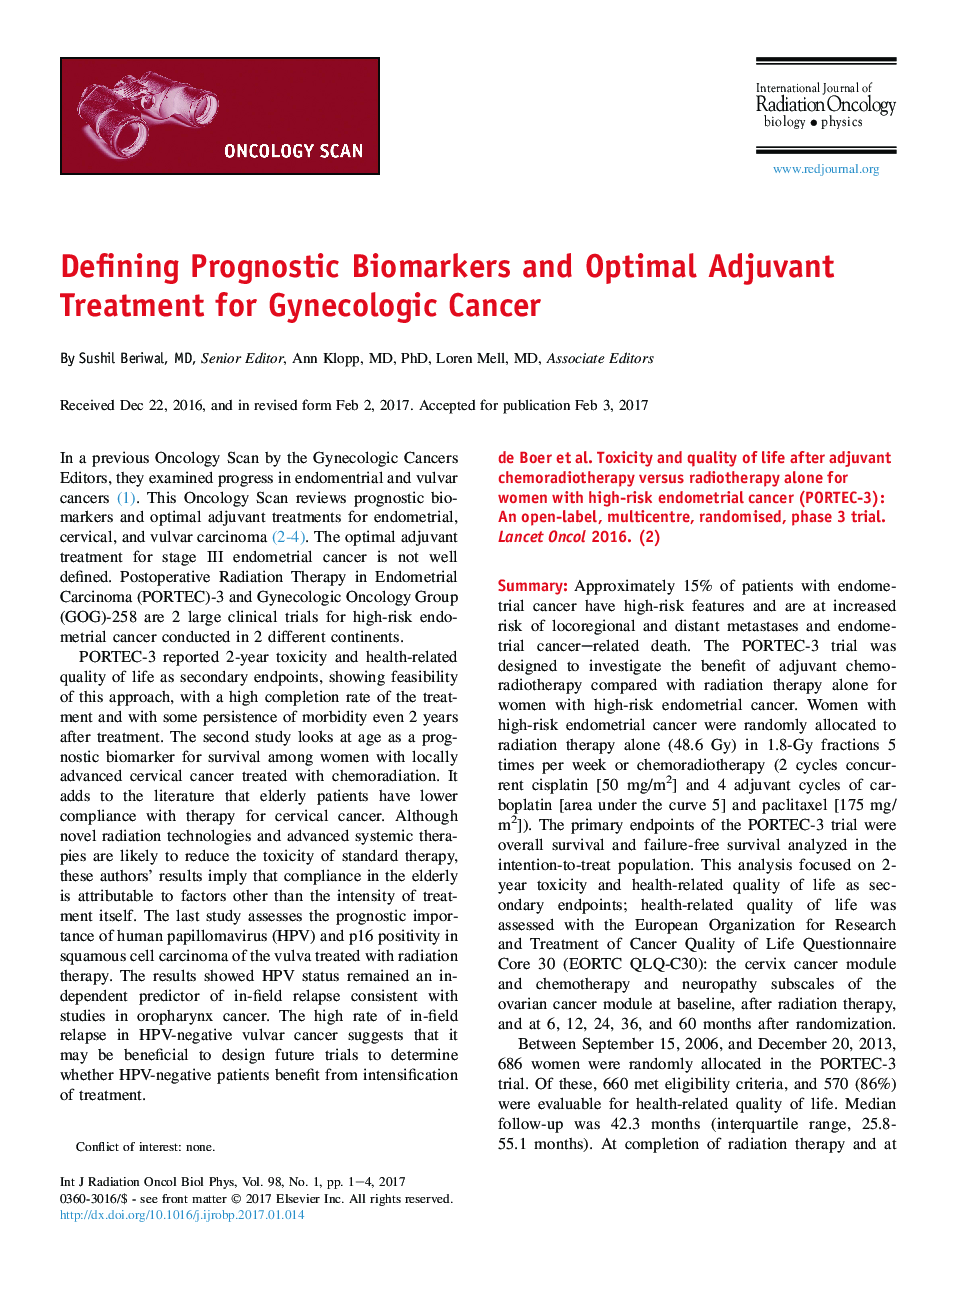 Defining Prognostic Biomarkers and Optimal Adjuvant Treatment for Gynecologic Cancer